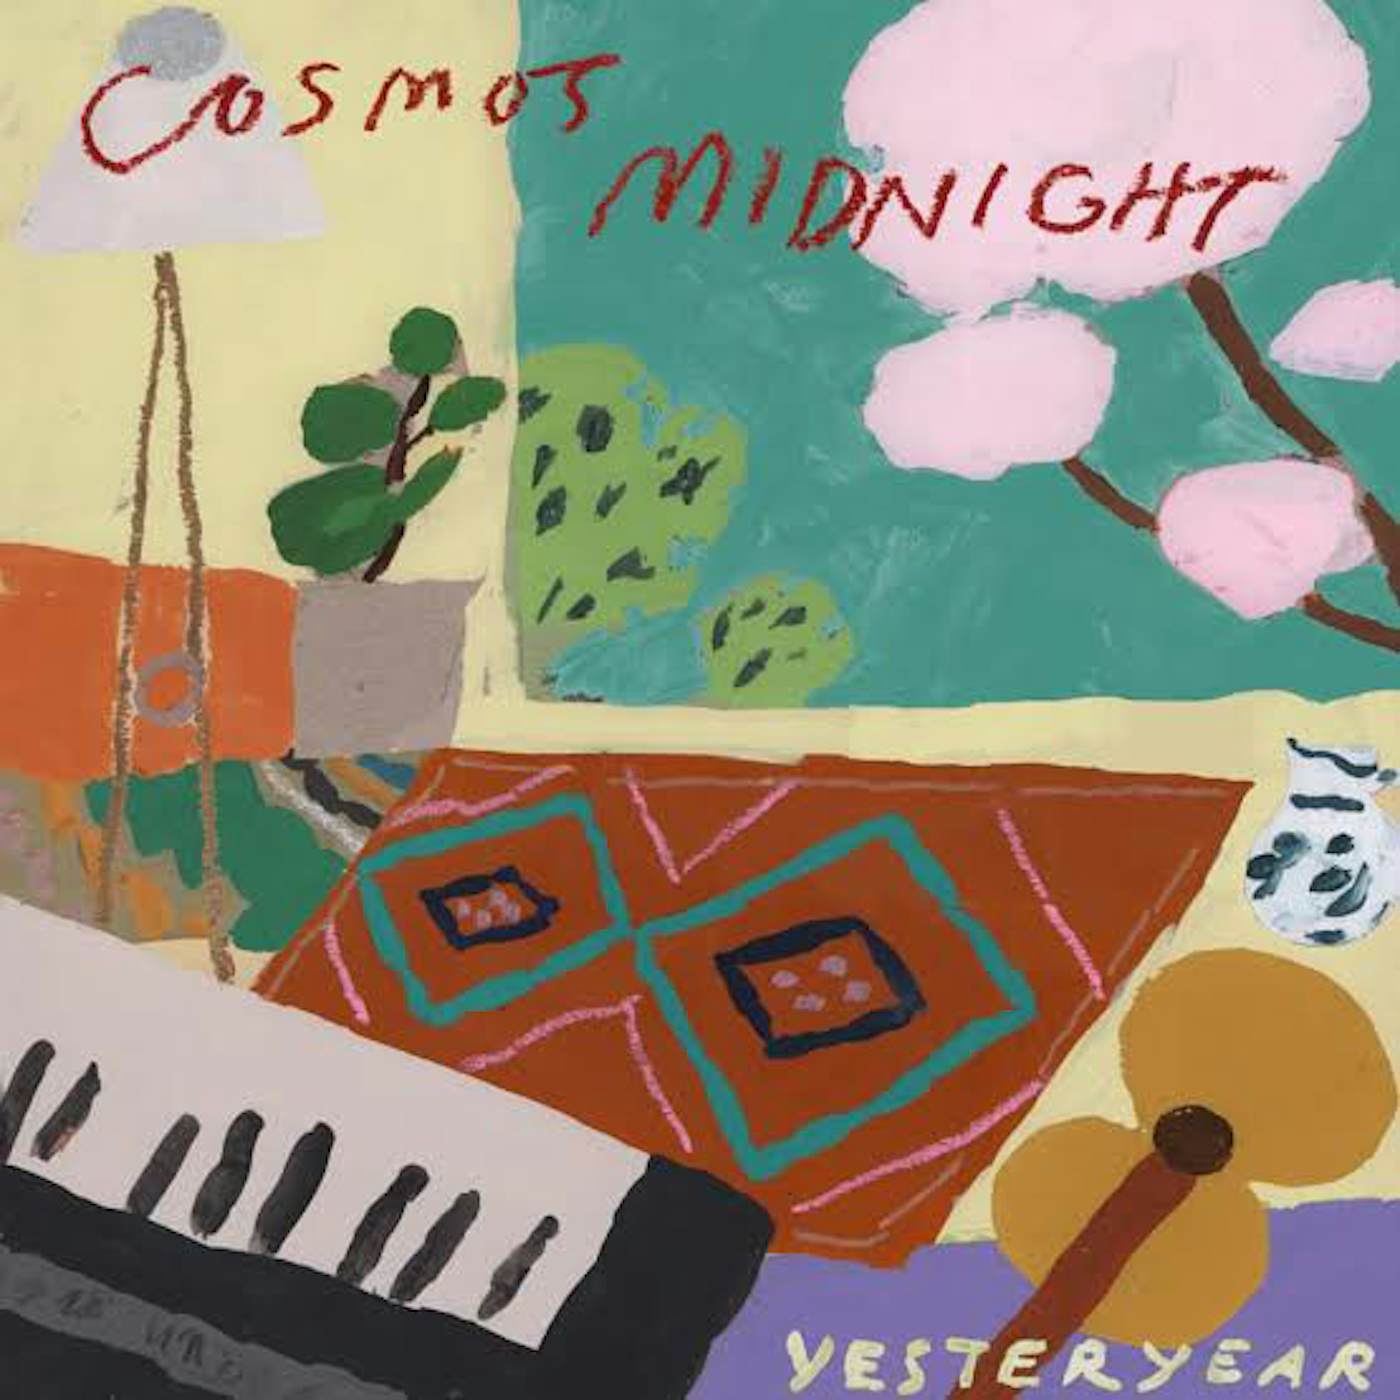 Cosmo's Midnight Yesteryear Vinyl Record